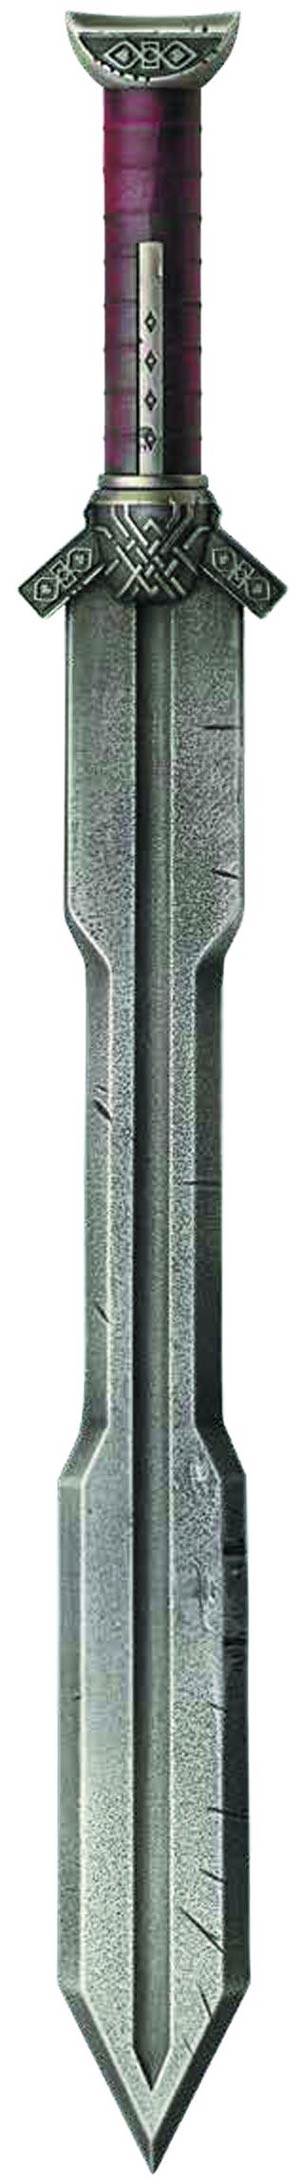 Hobbit Sword Of Kili The Dwarf Replica